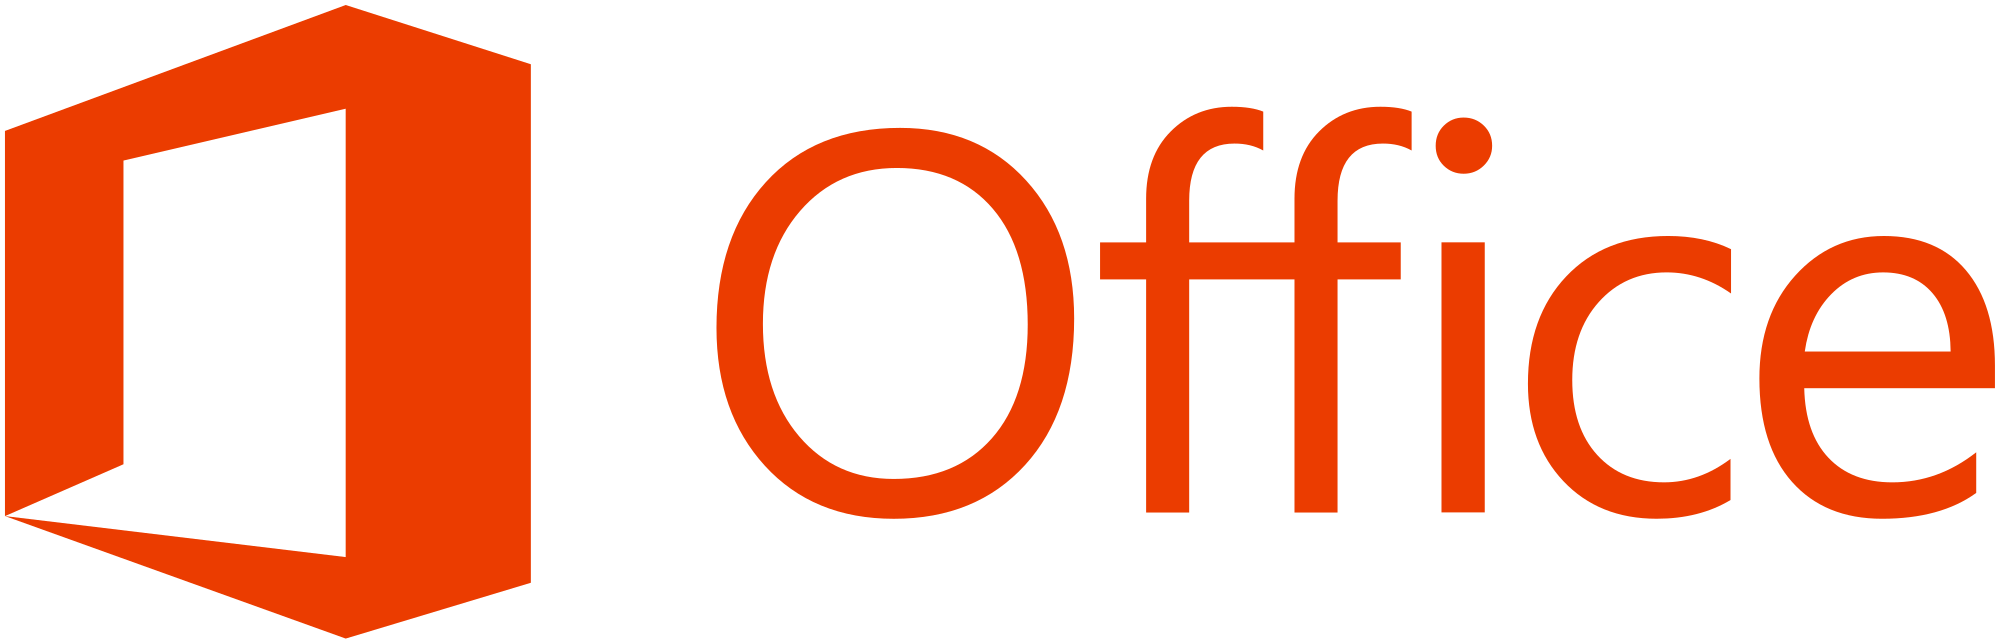 Microsoft Office 2013 Logo - File:Microsoft Office 2013 logo and wordmark.svg - Wikimedia Commons